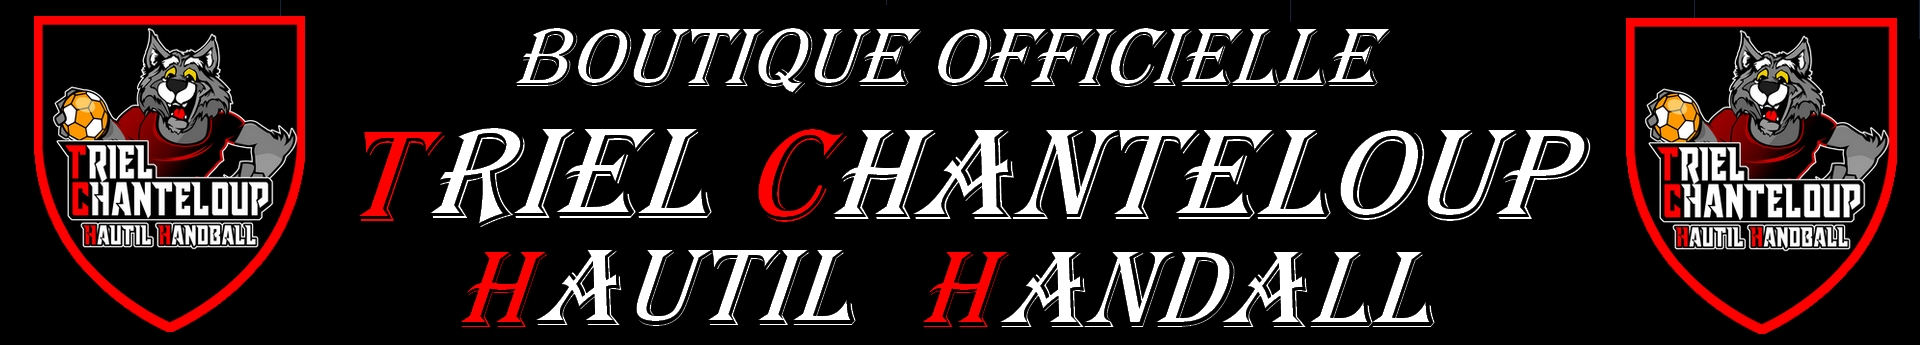 Triel Chanteloup Hautil Handball Title Image